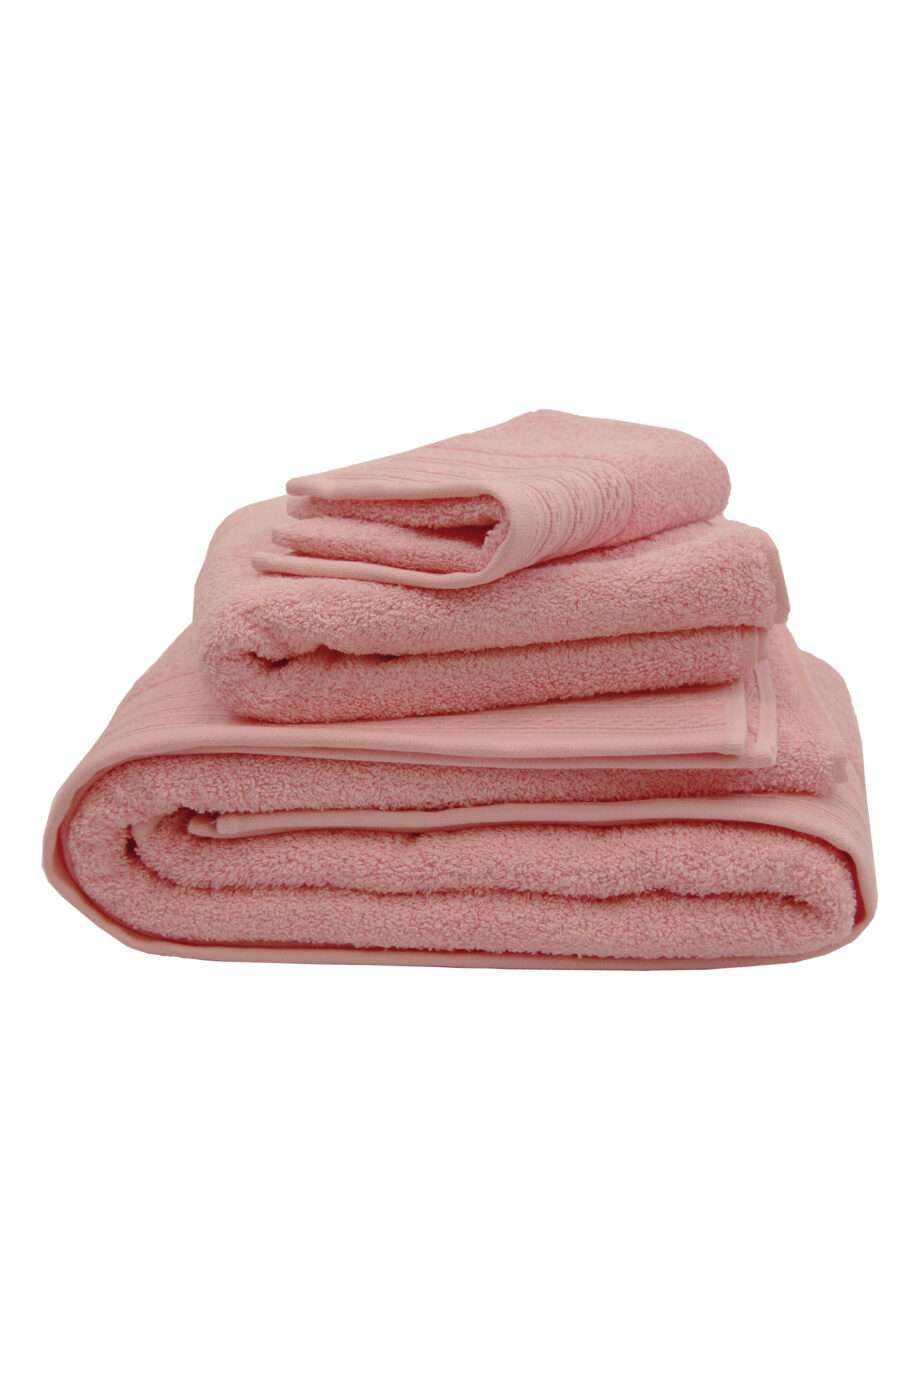 cancun pink woven cotton towel set